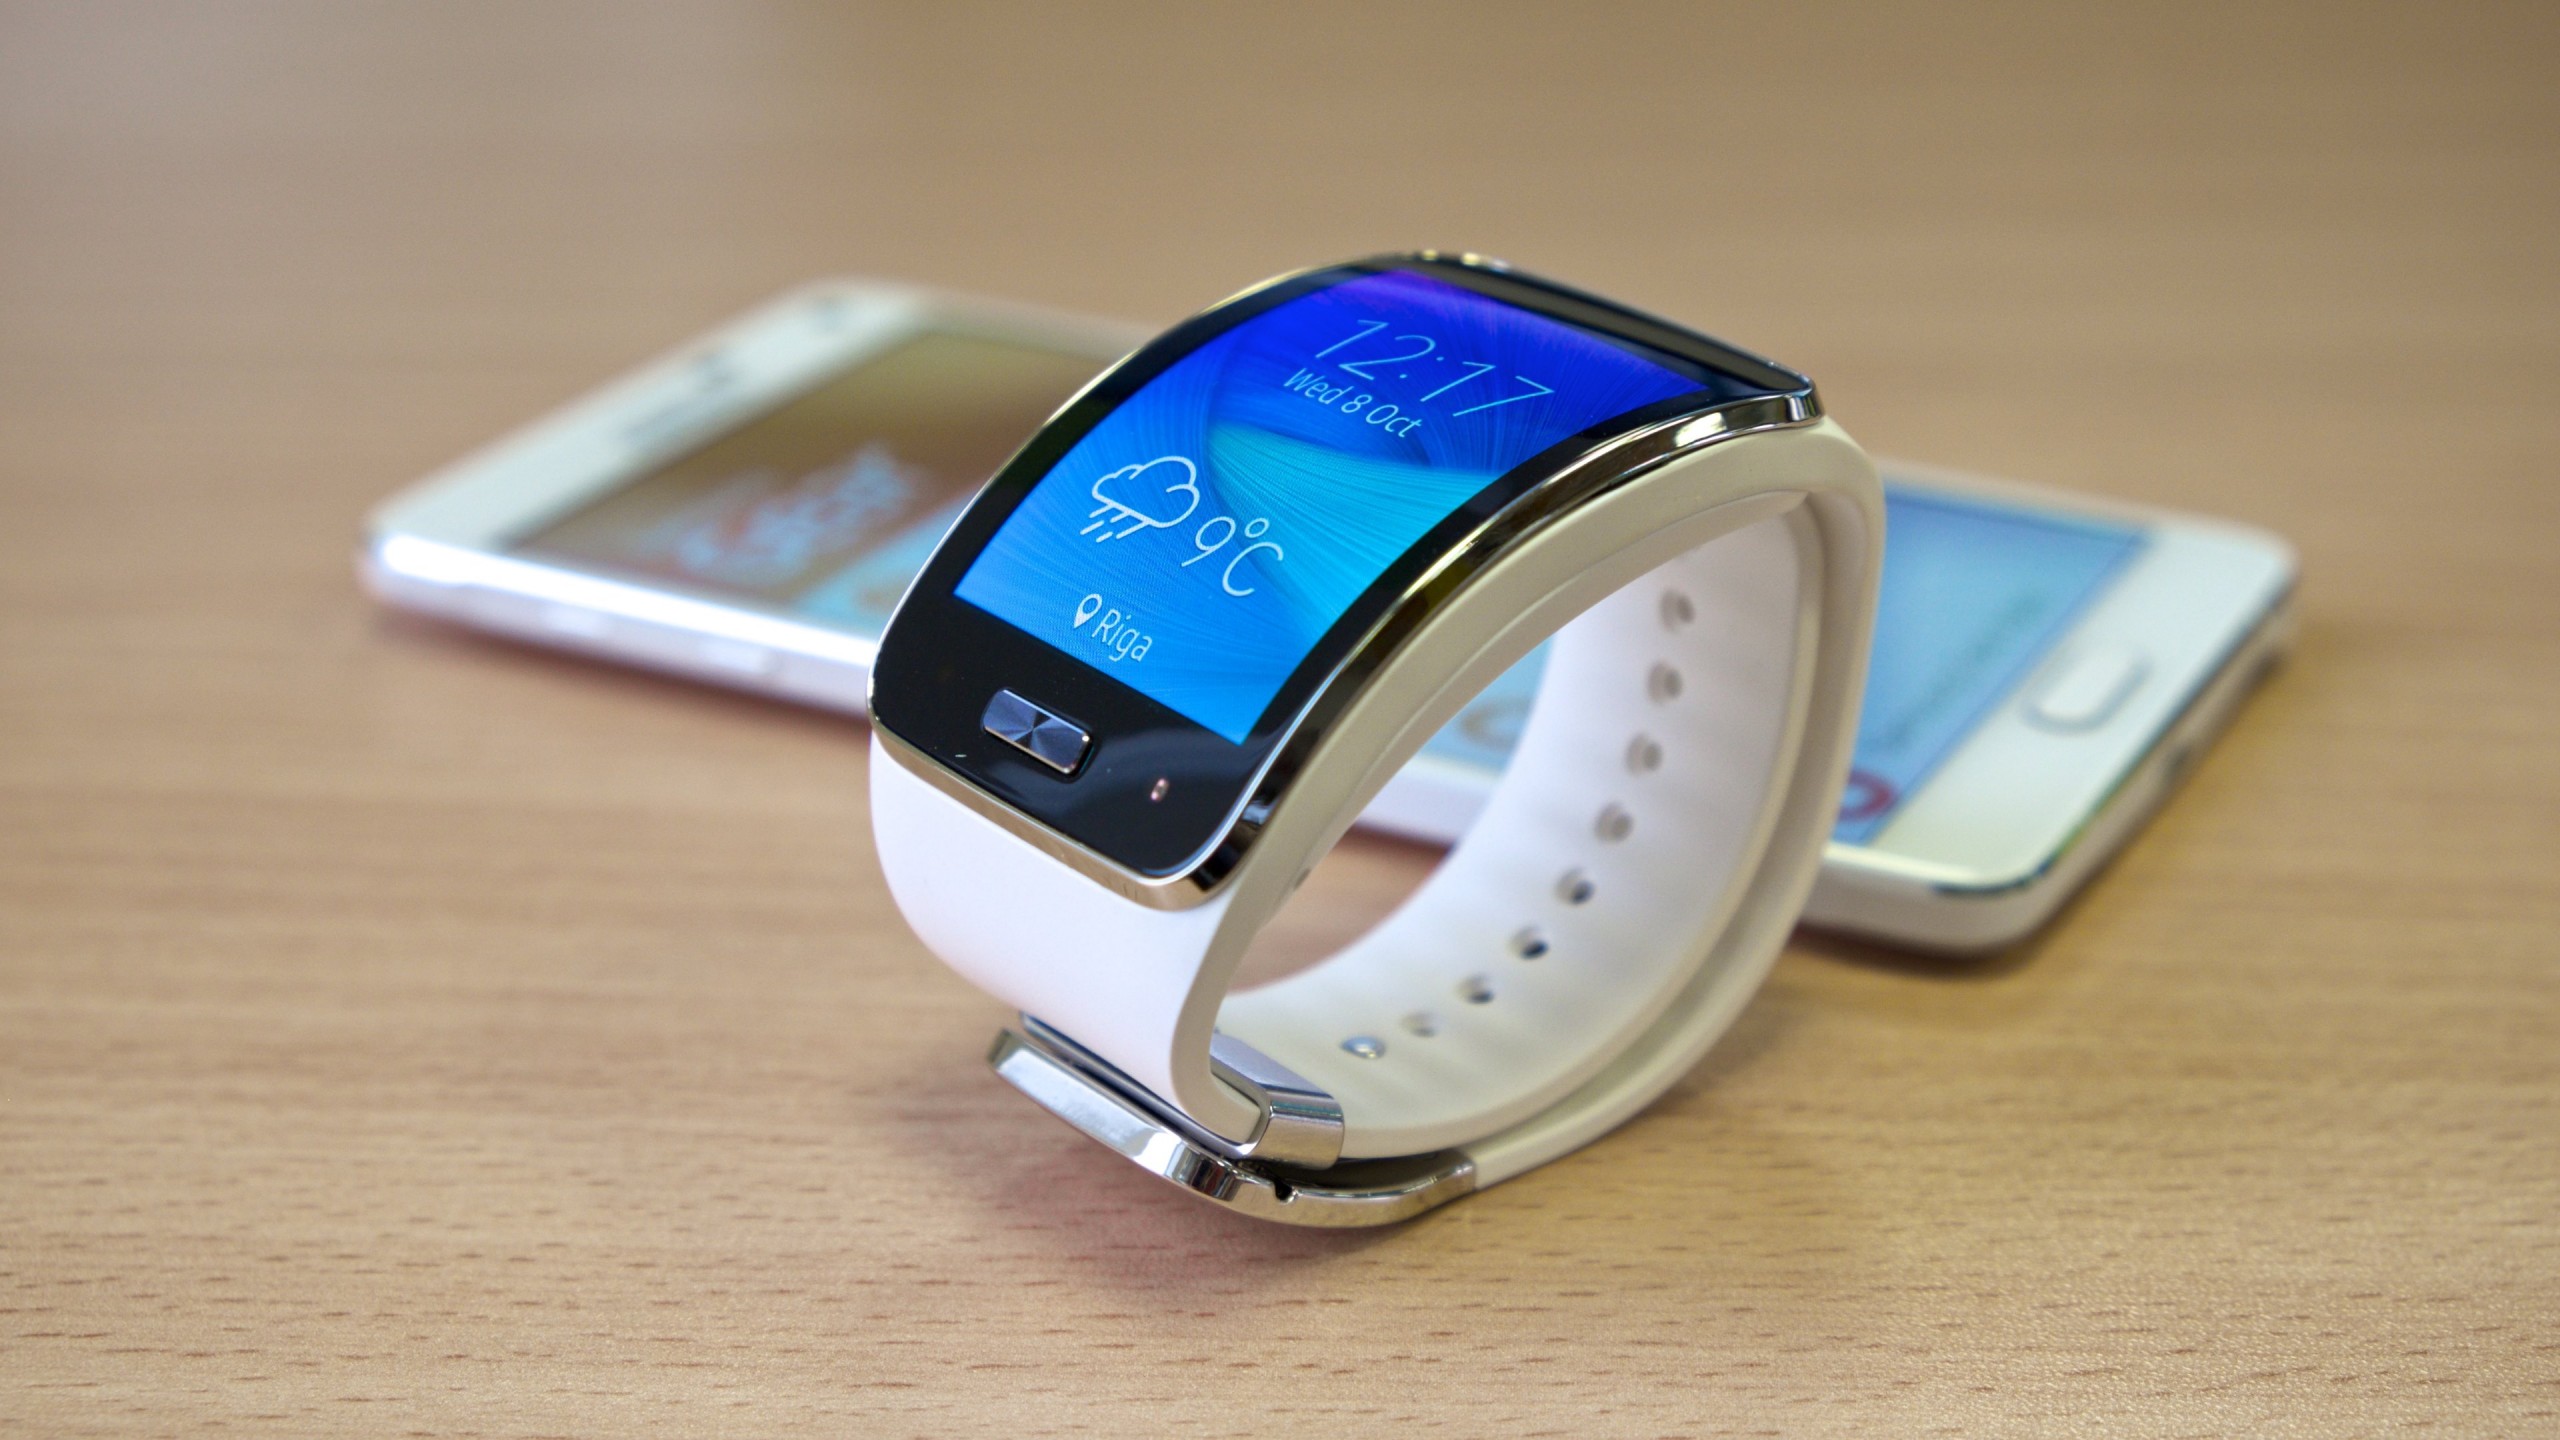 smartwatch wallpaper,gadget,watch,mobile phone,watch phone,portable communications device